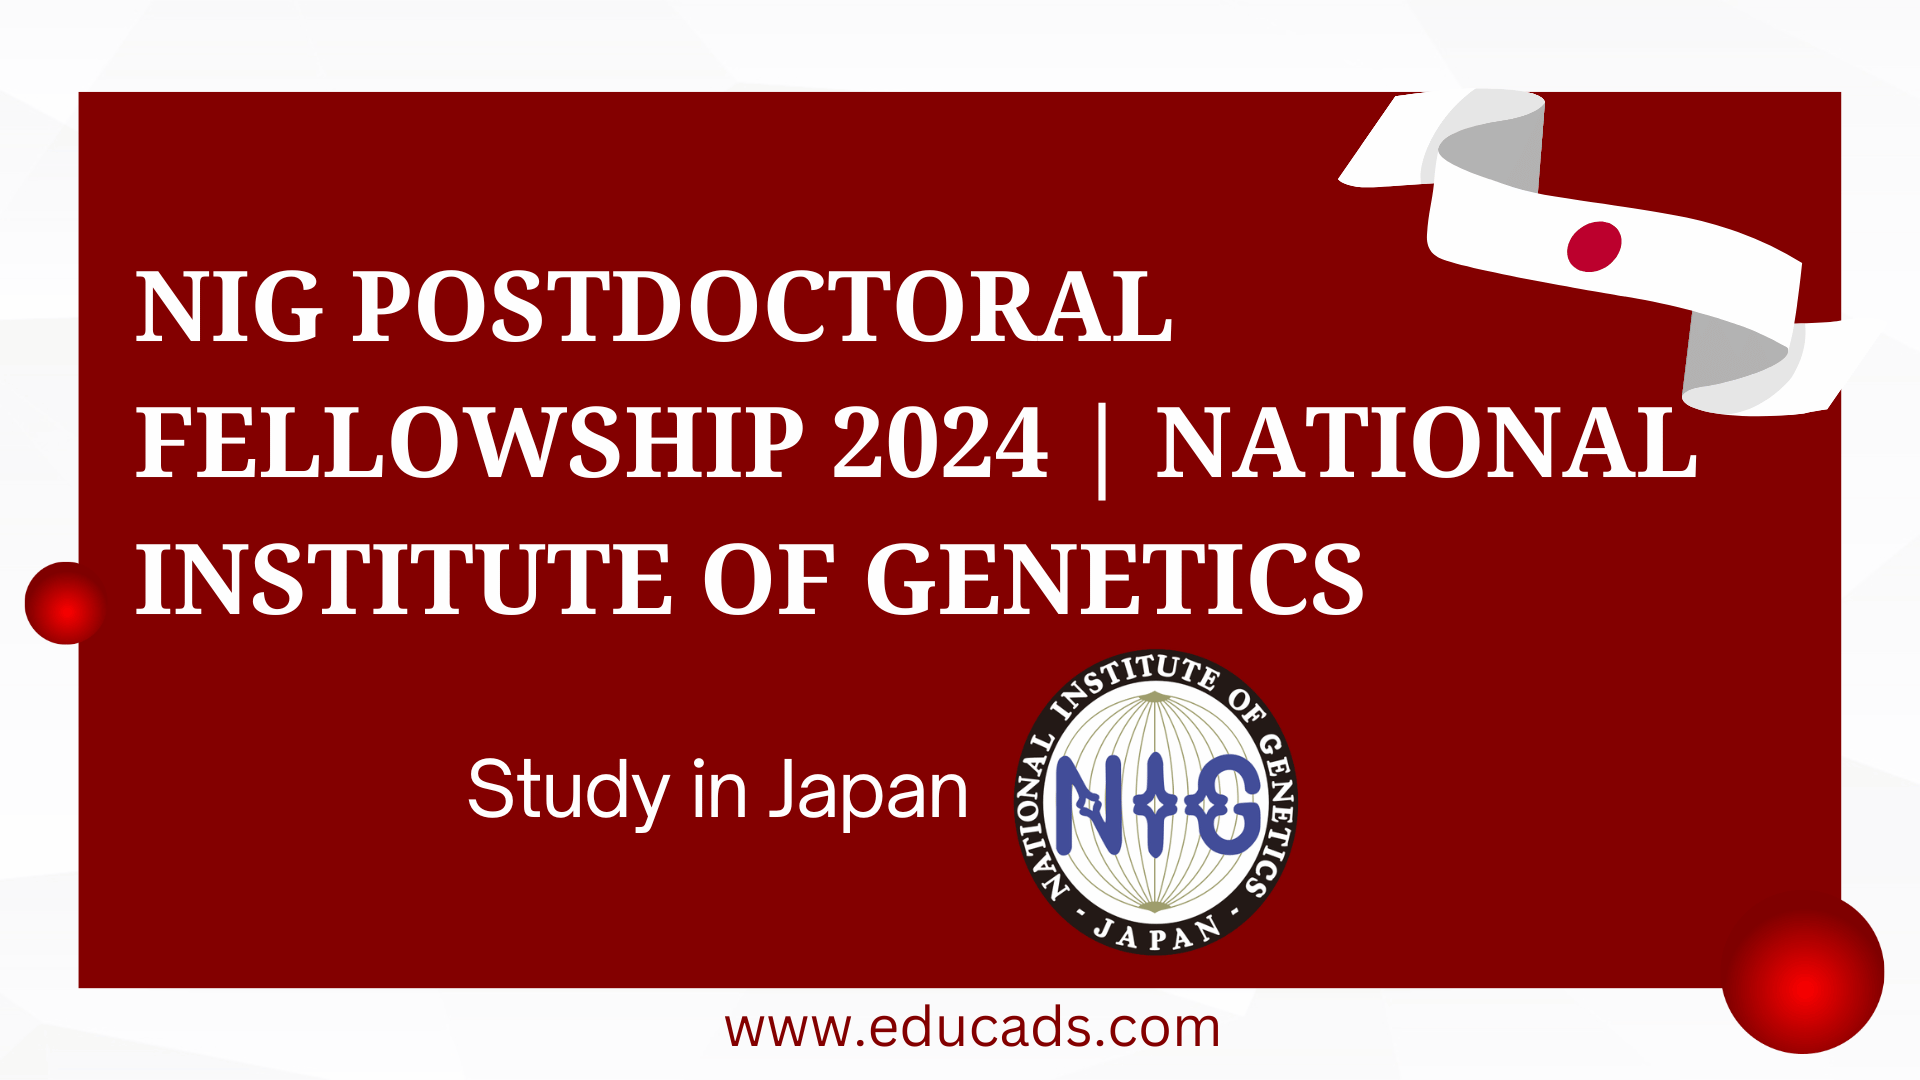 NIG Postdoctoral Fellowship 2024 National Institute Of Educads